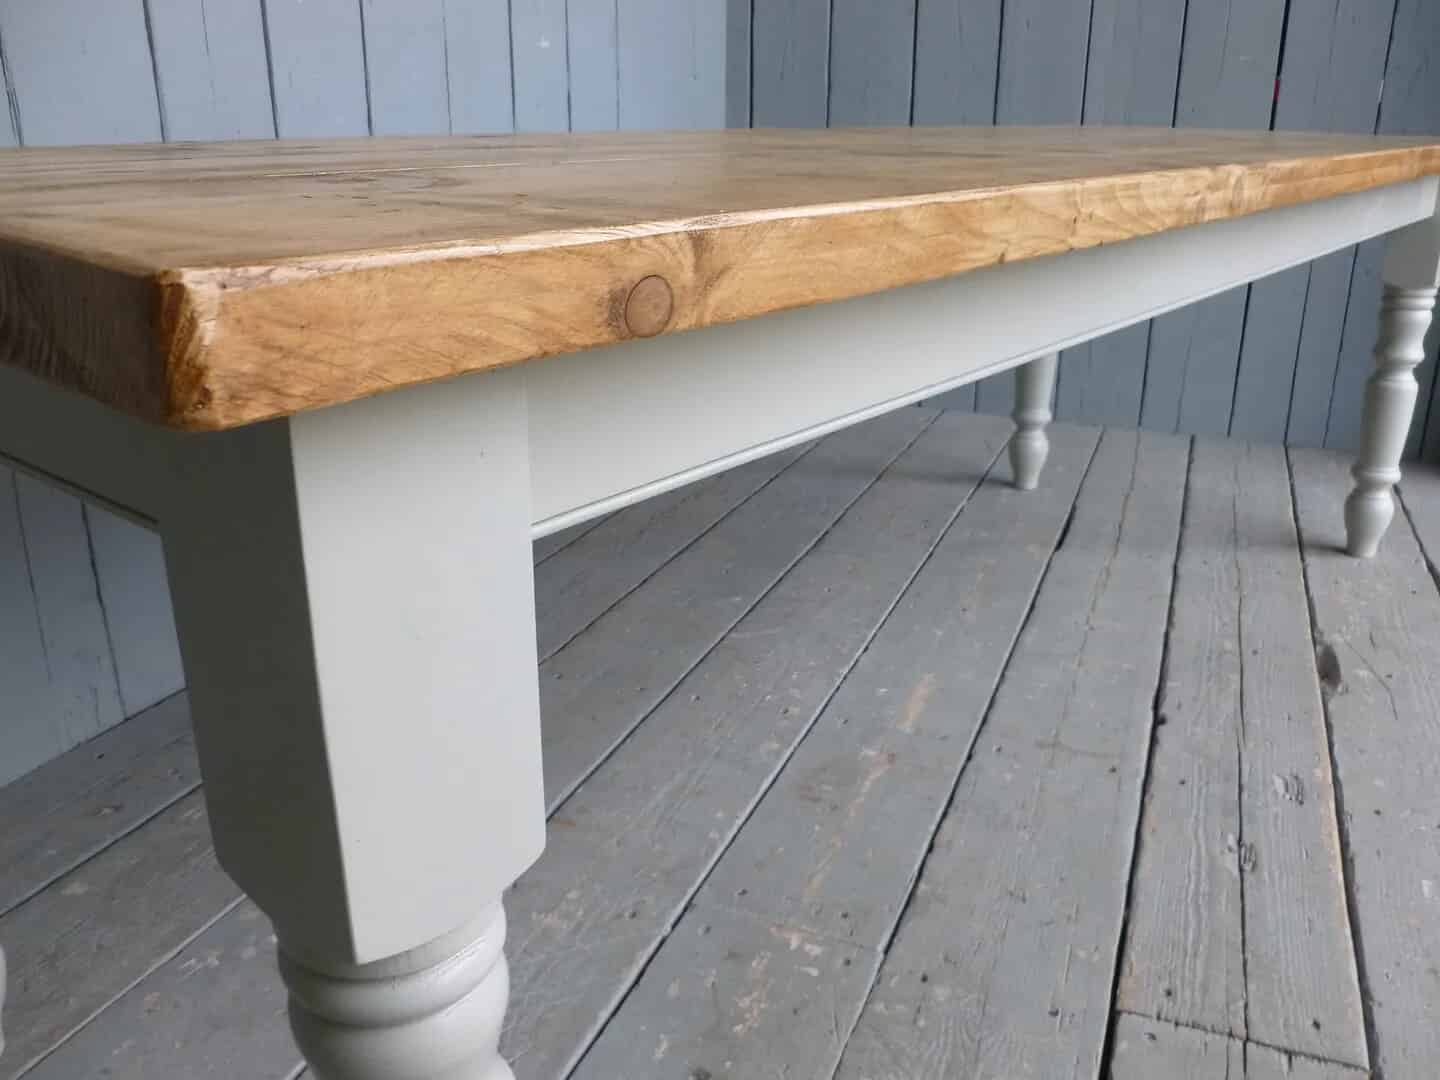 bespoke pine kitchen table